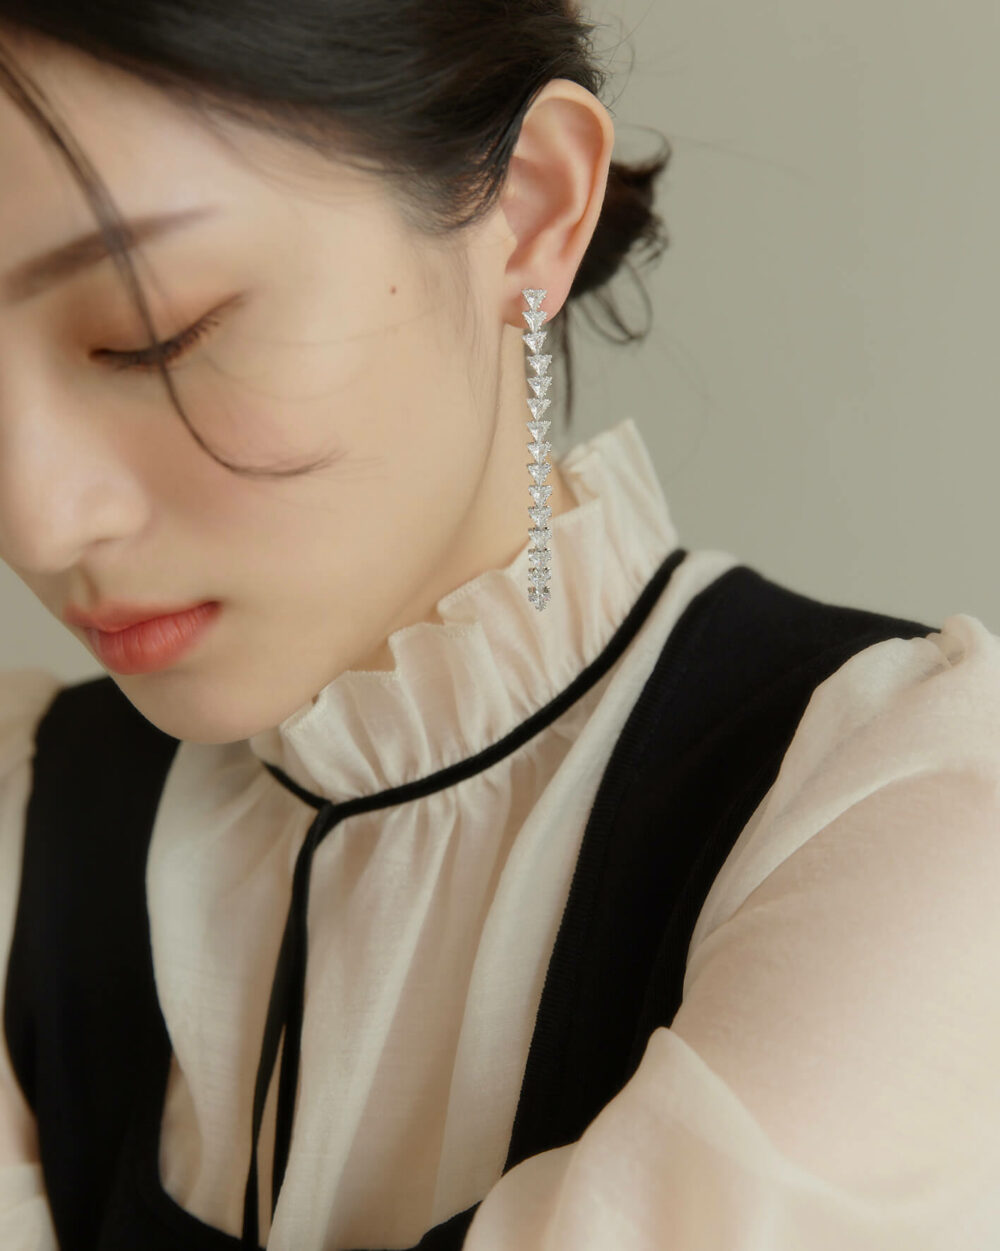 Eco安珂,韓國飾品,韓國耳環,耳針式耳環,矽膠夾耳環,透明耳夾耳環,矽膠夾垂墜耳環